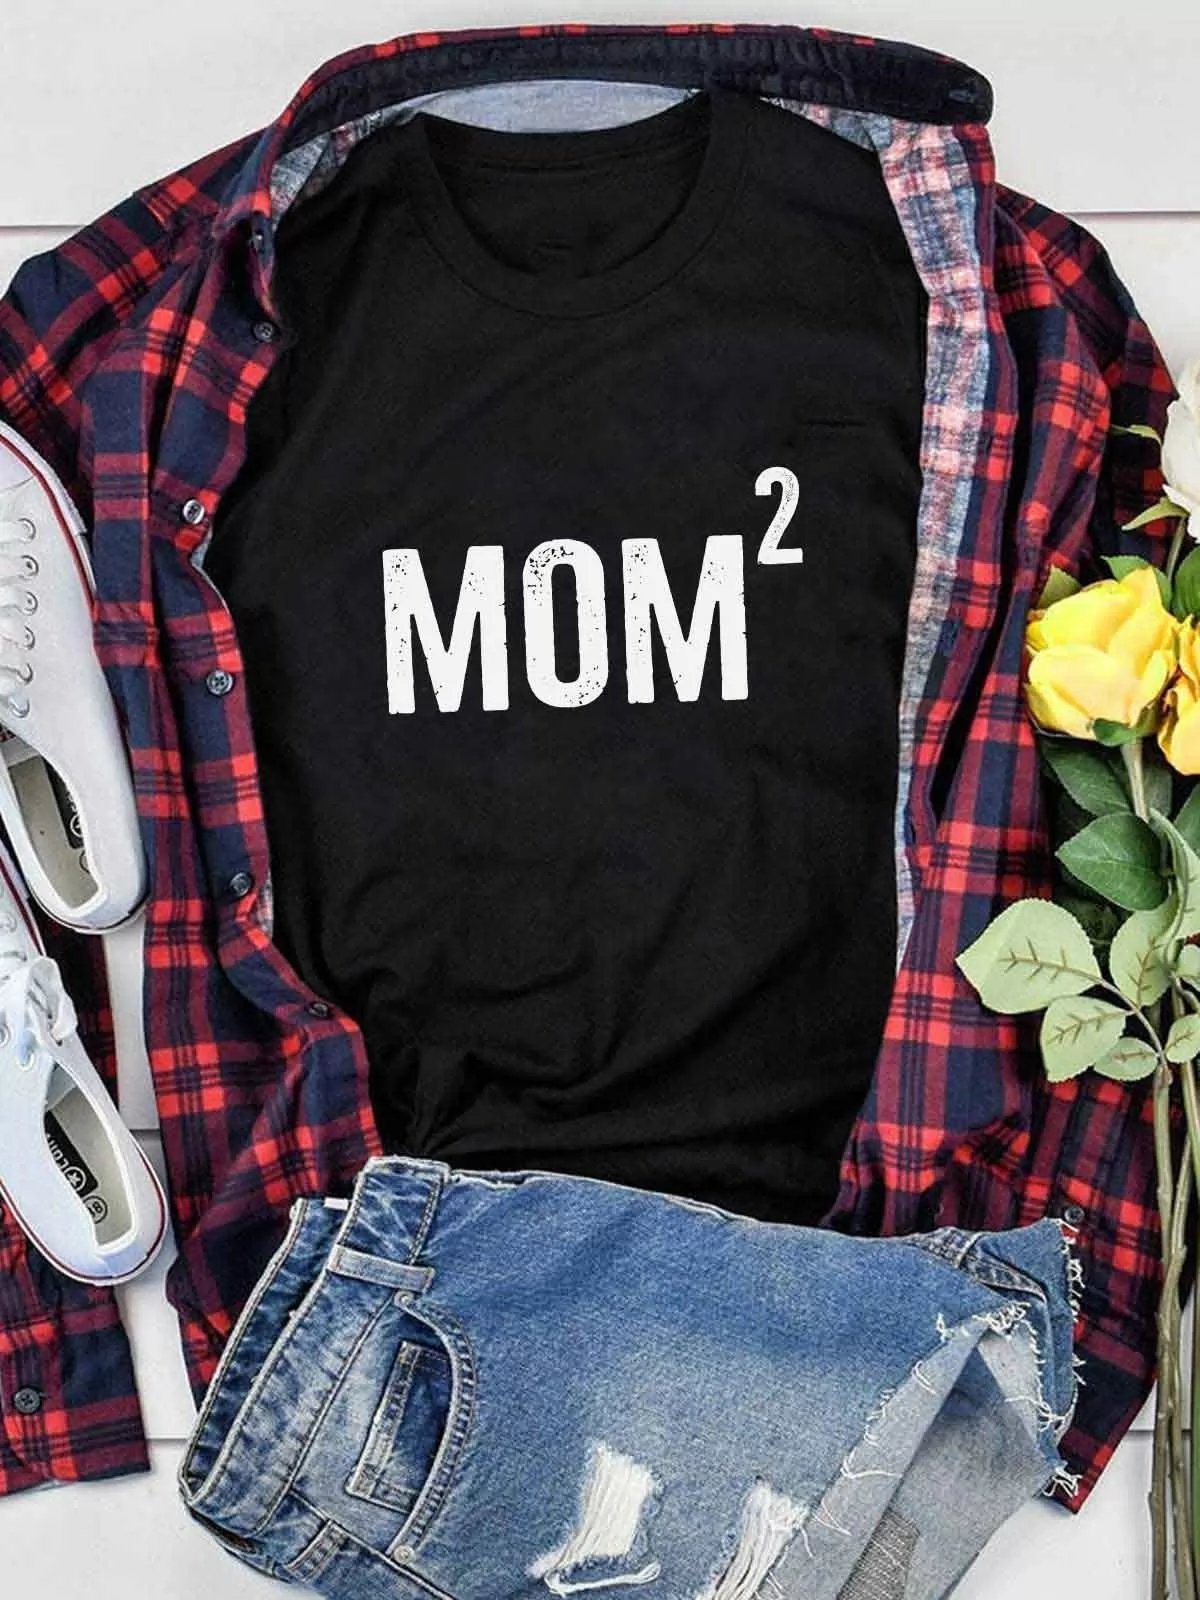 Mom² Great Mom Printed Tee